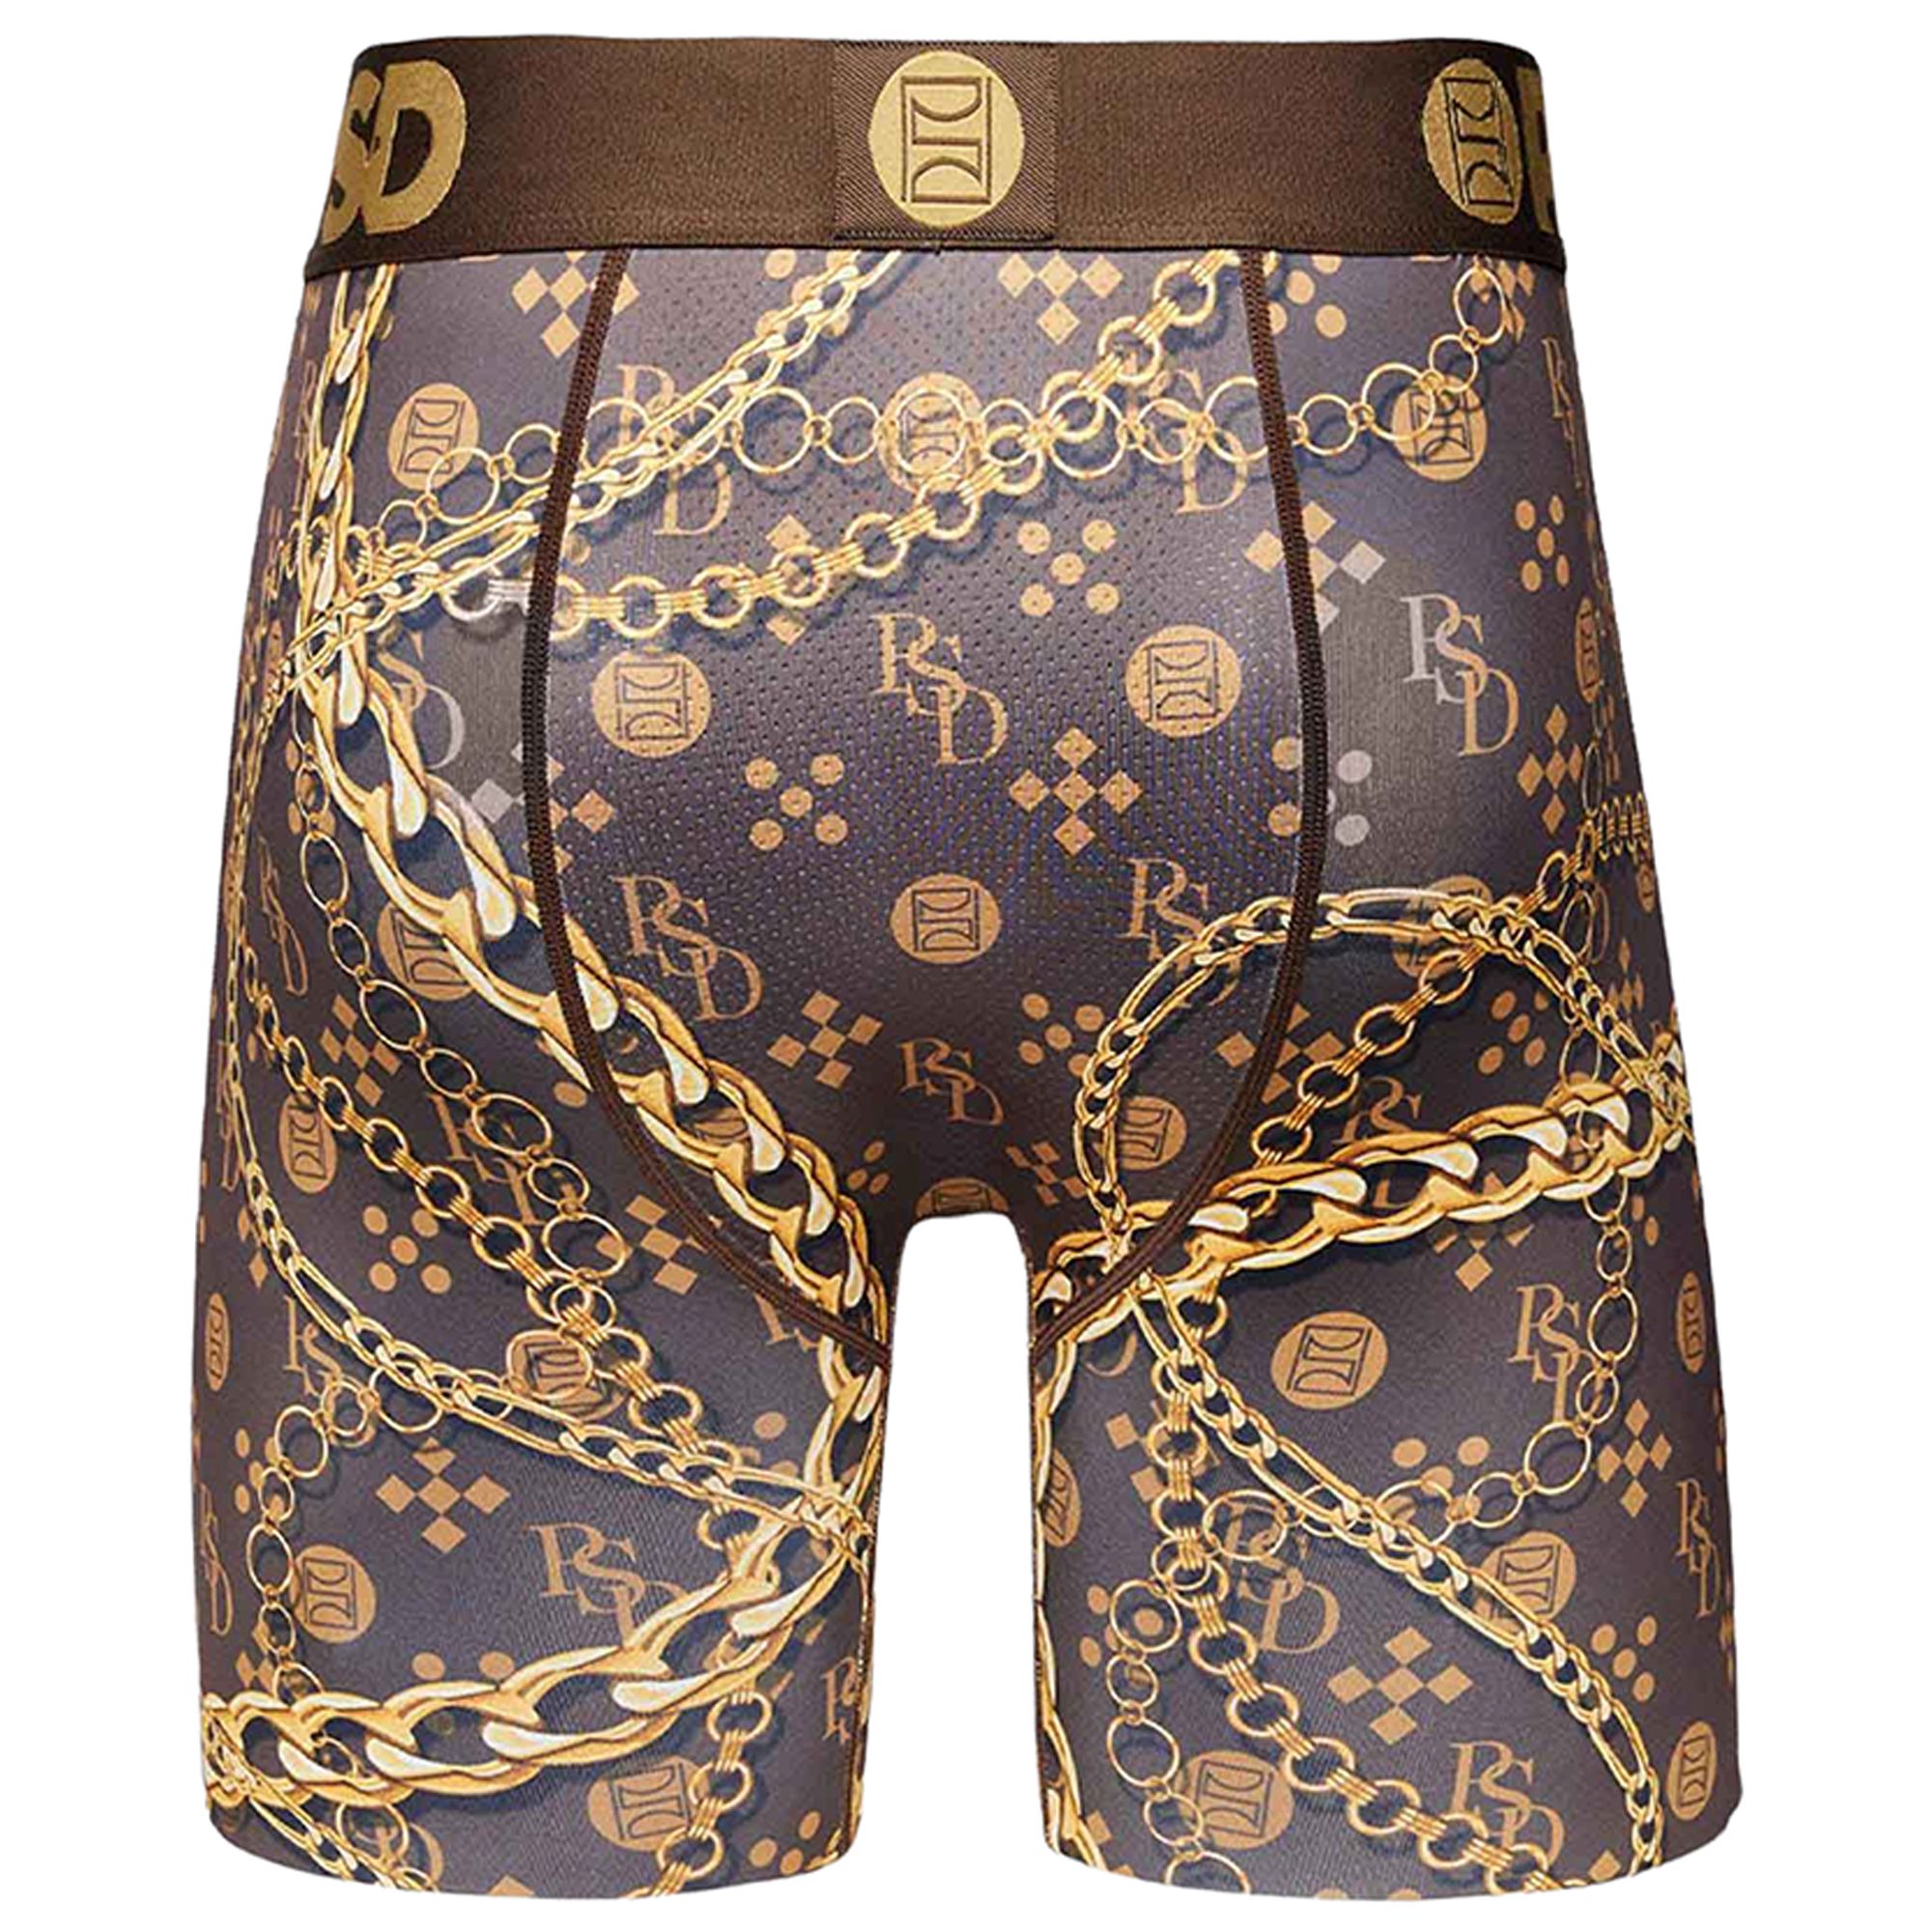 PSD Underwear Boxer Briefs - Bandanas -  - Gifts with 1 Y & 2 Z's